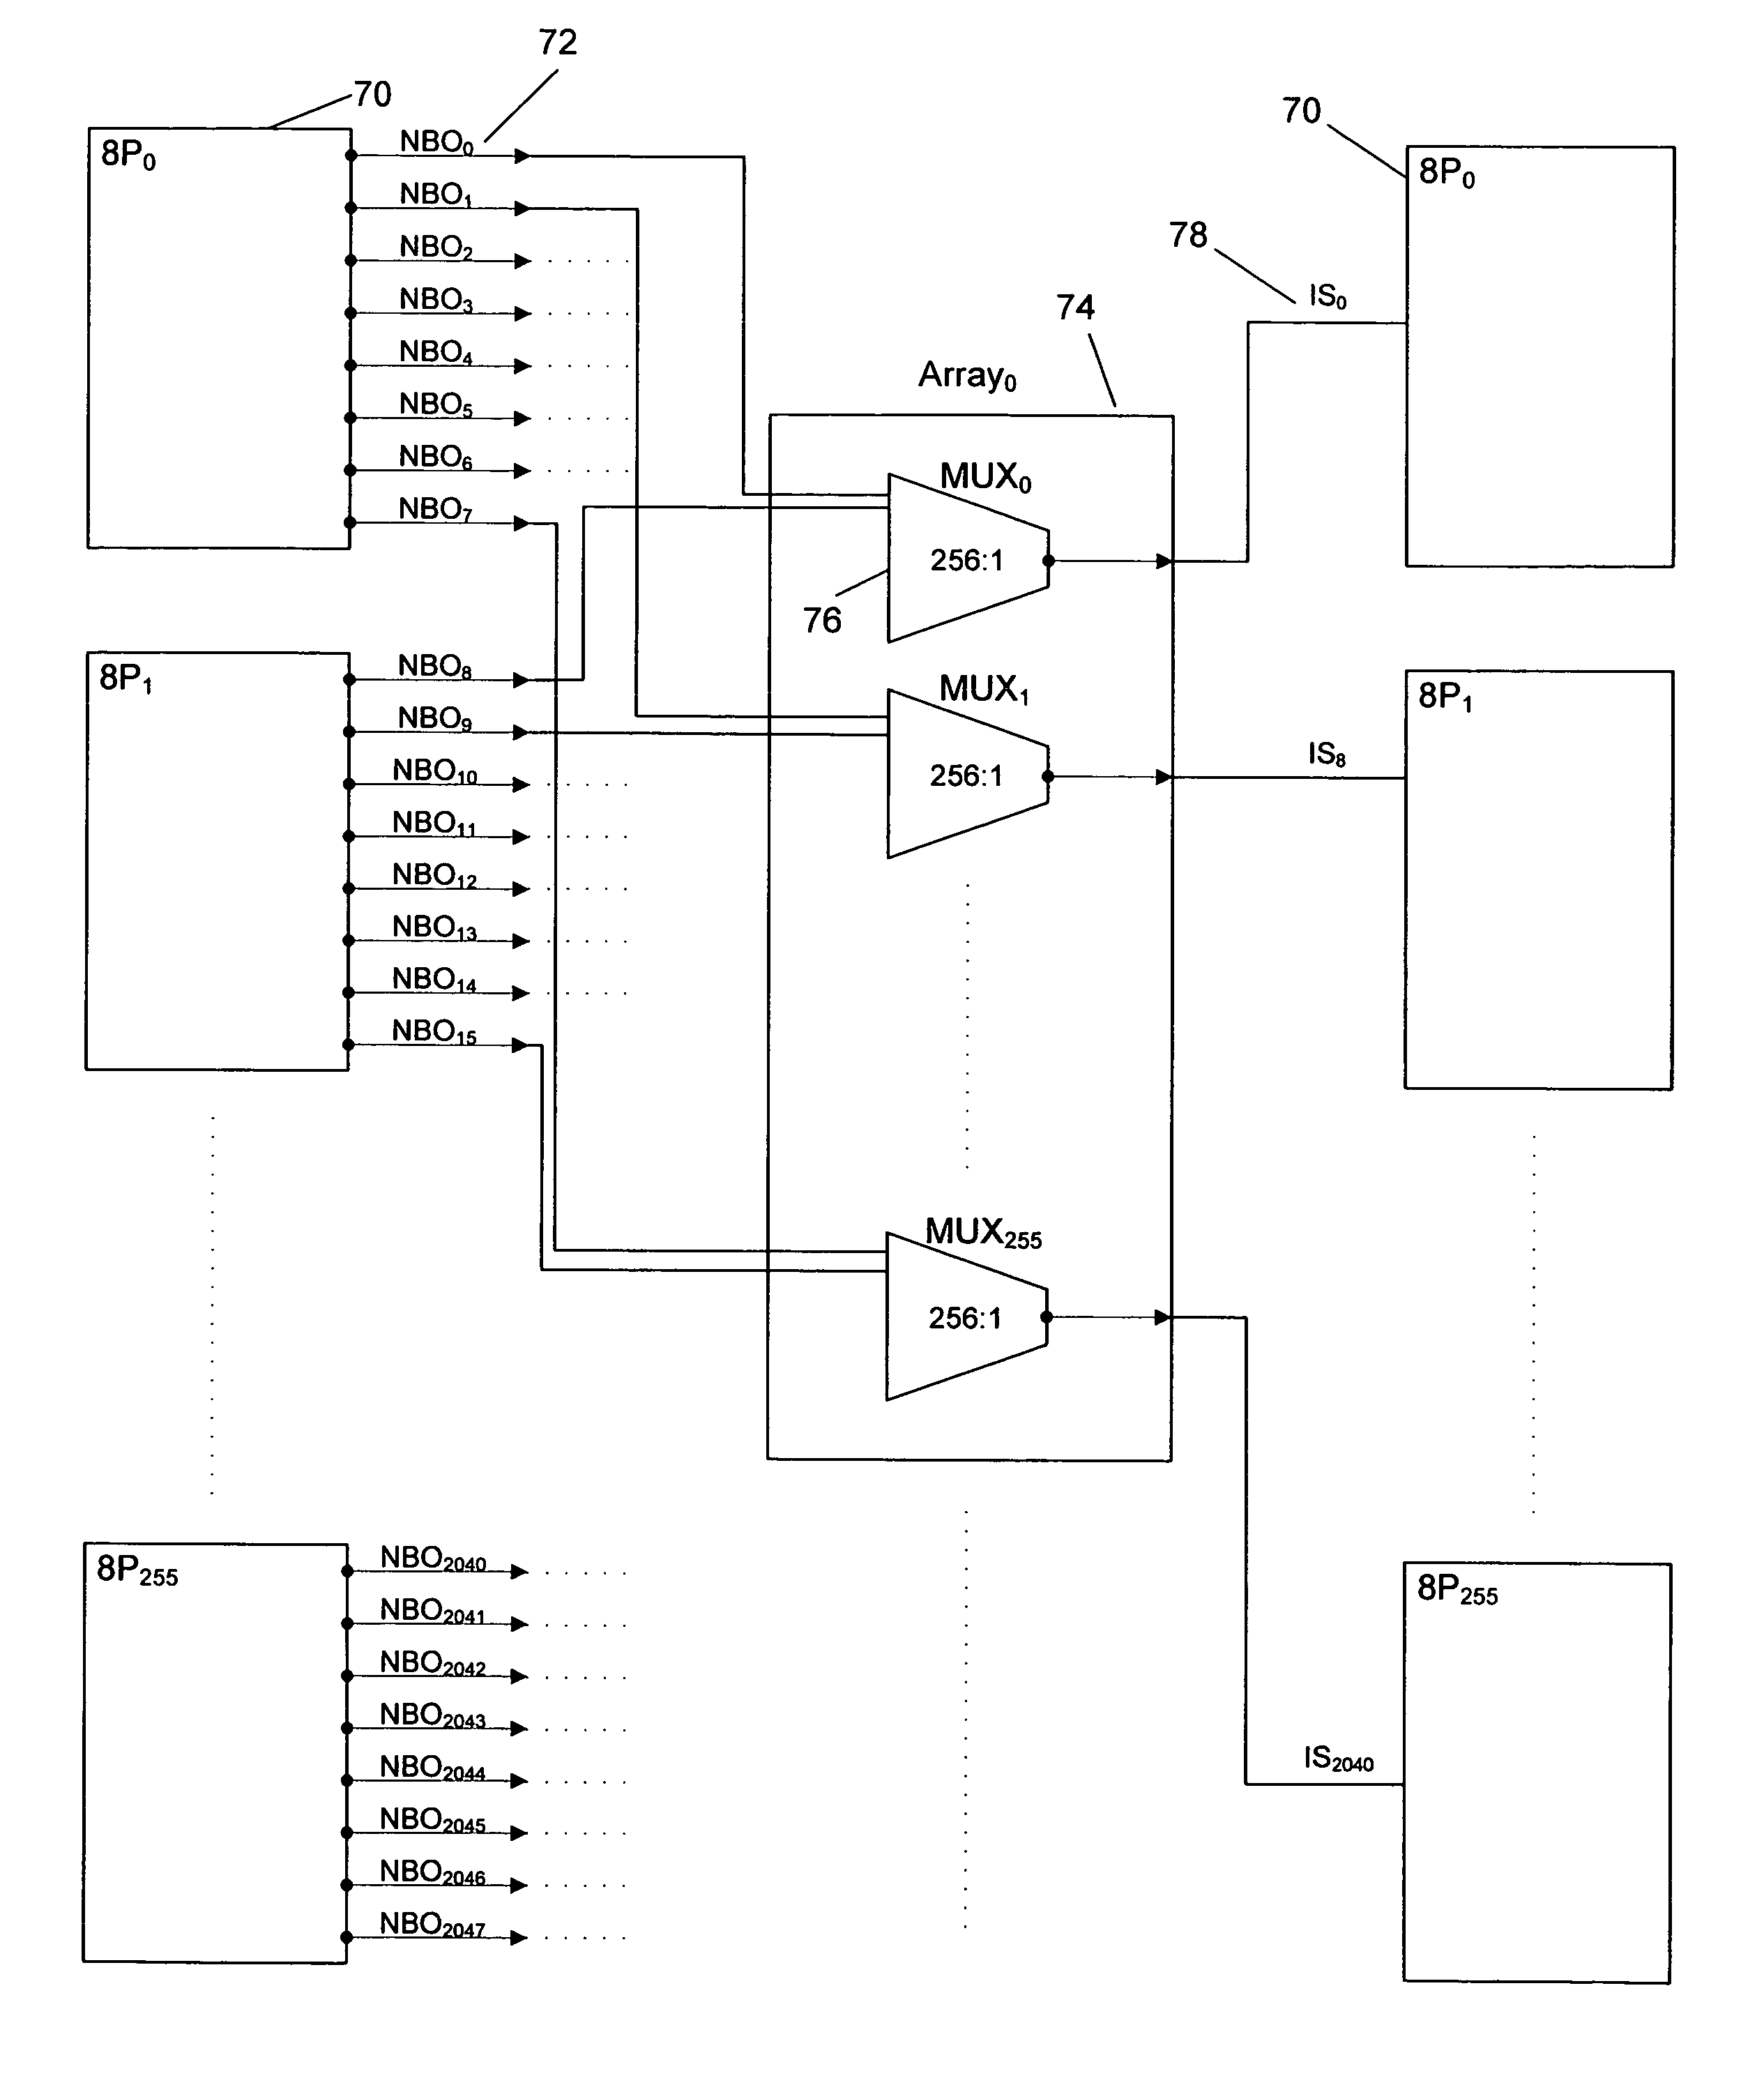 Emulation processor interconnection architecture